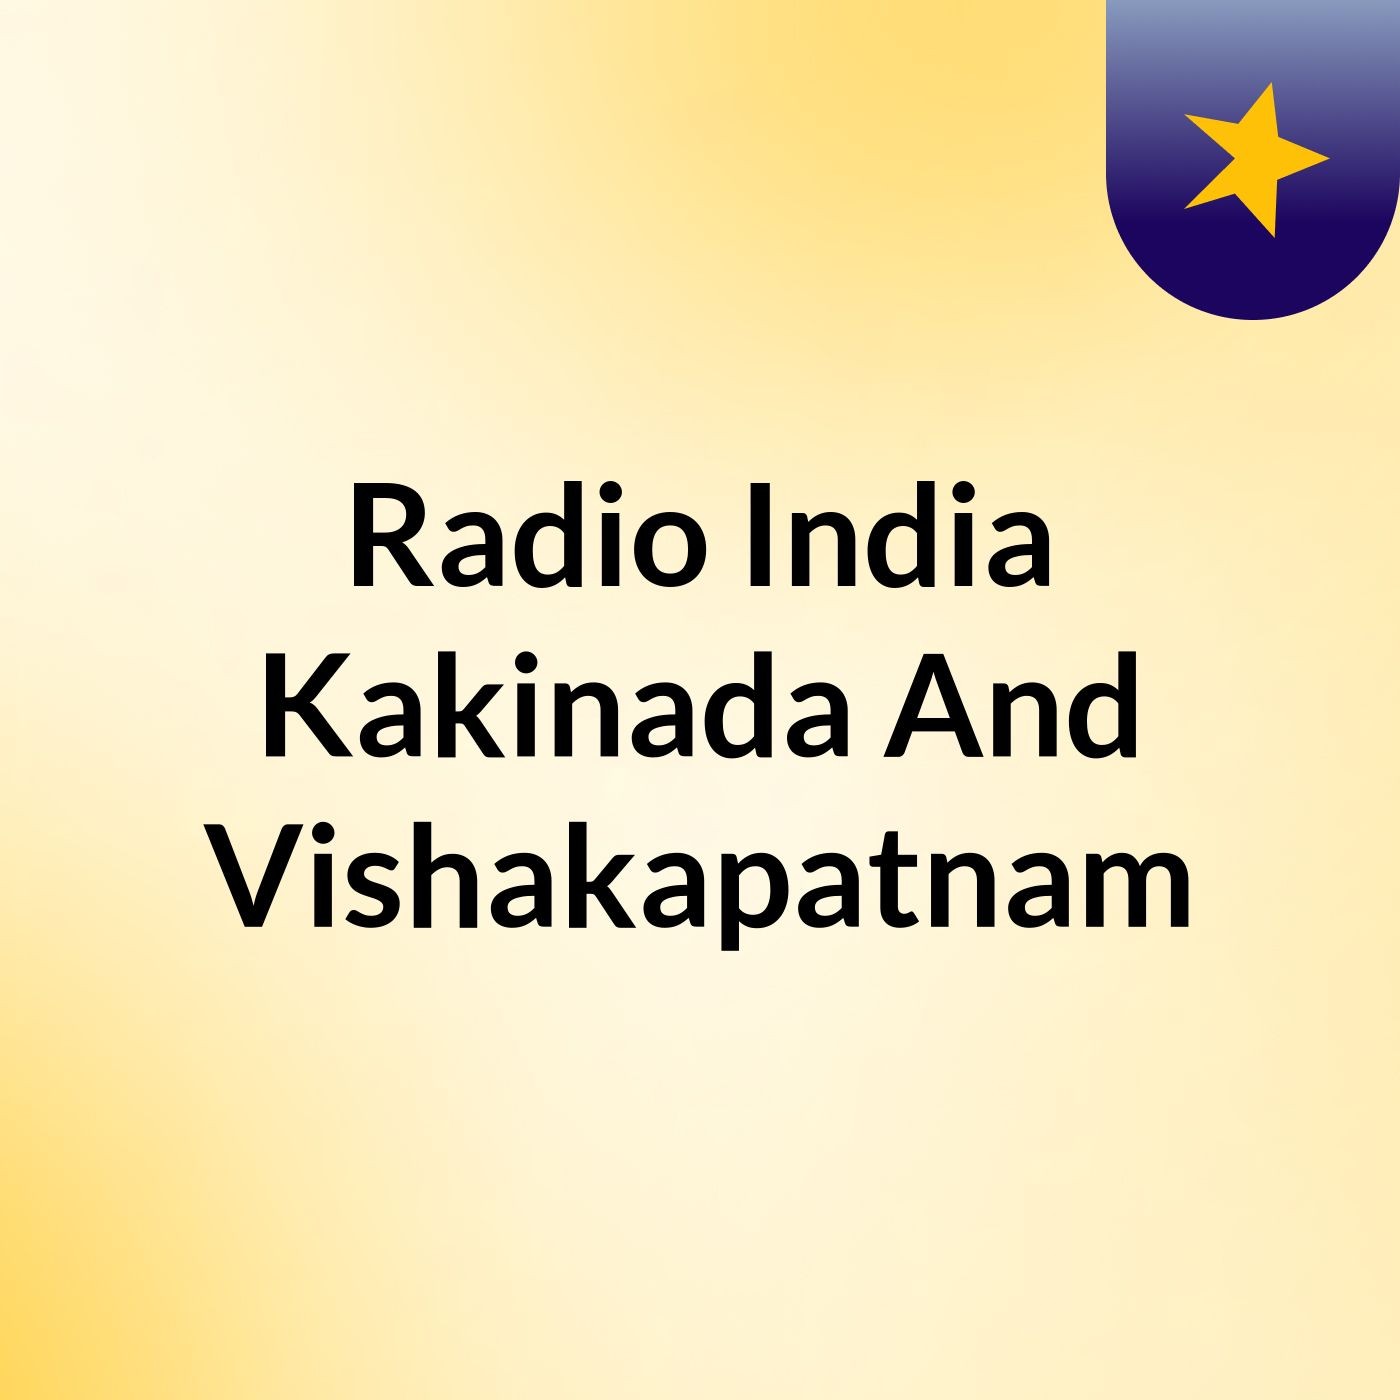 Radio India Kakinada And Vishakapatnam